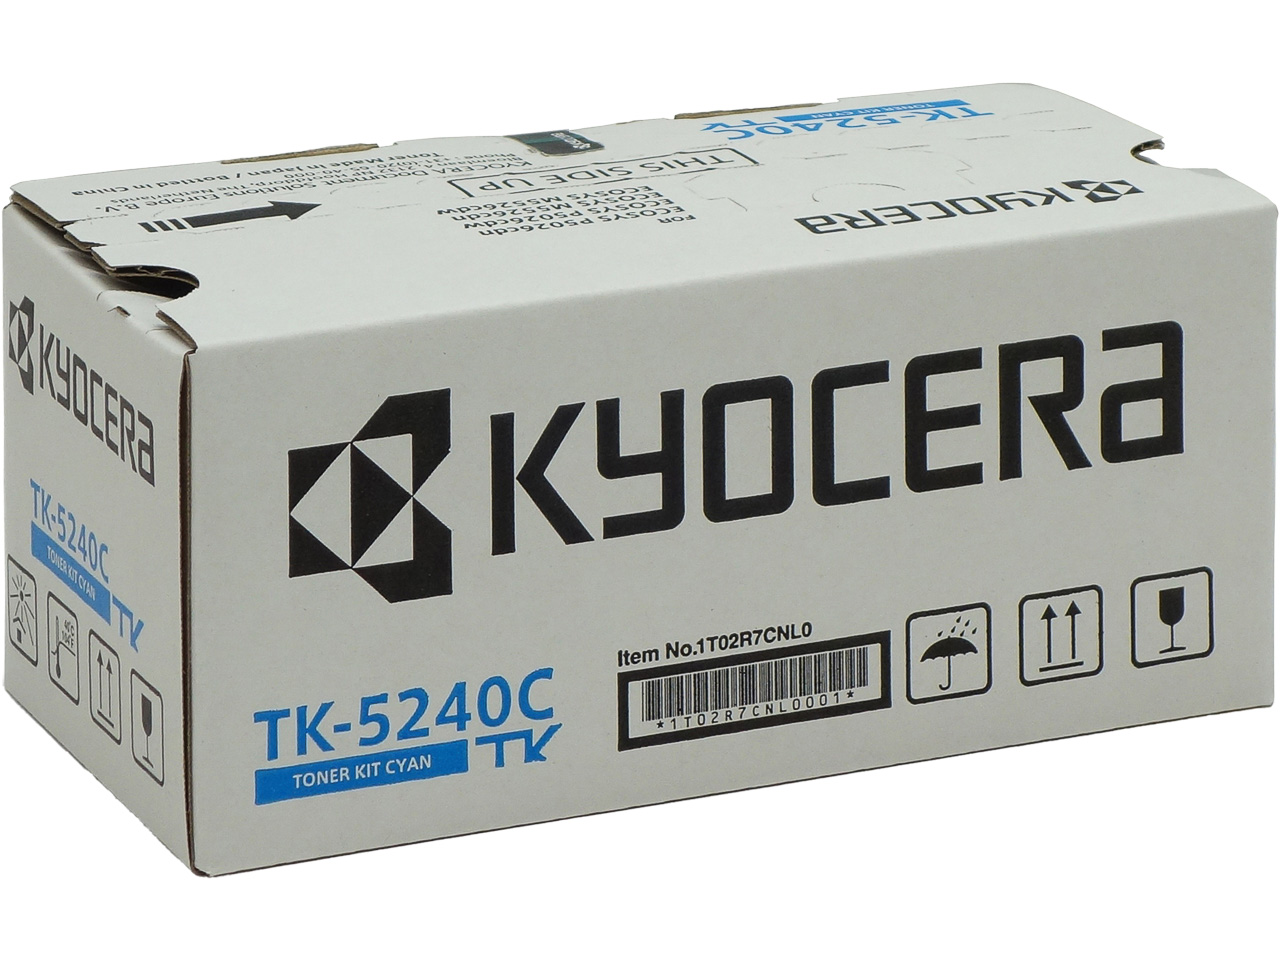 KYOCERA TK5240C ECOSYS TONER CYAN 3000S - 1T02R7CNL0